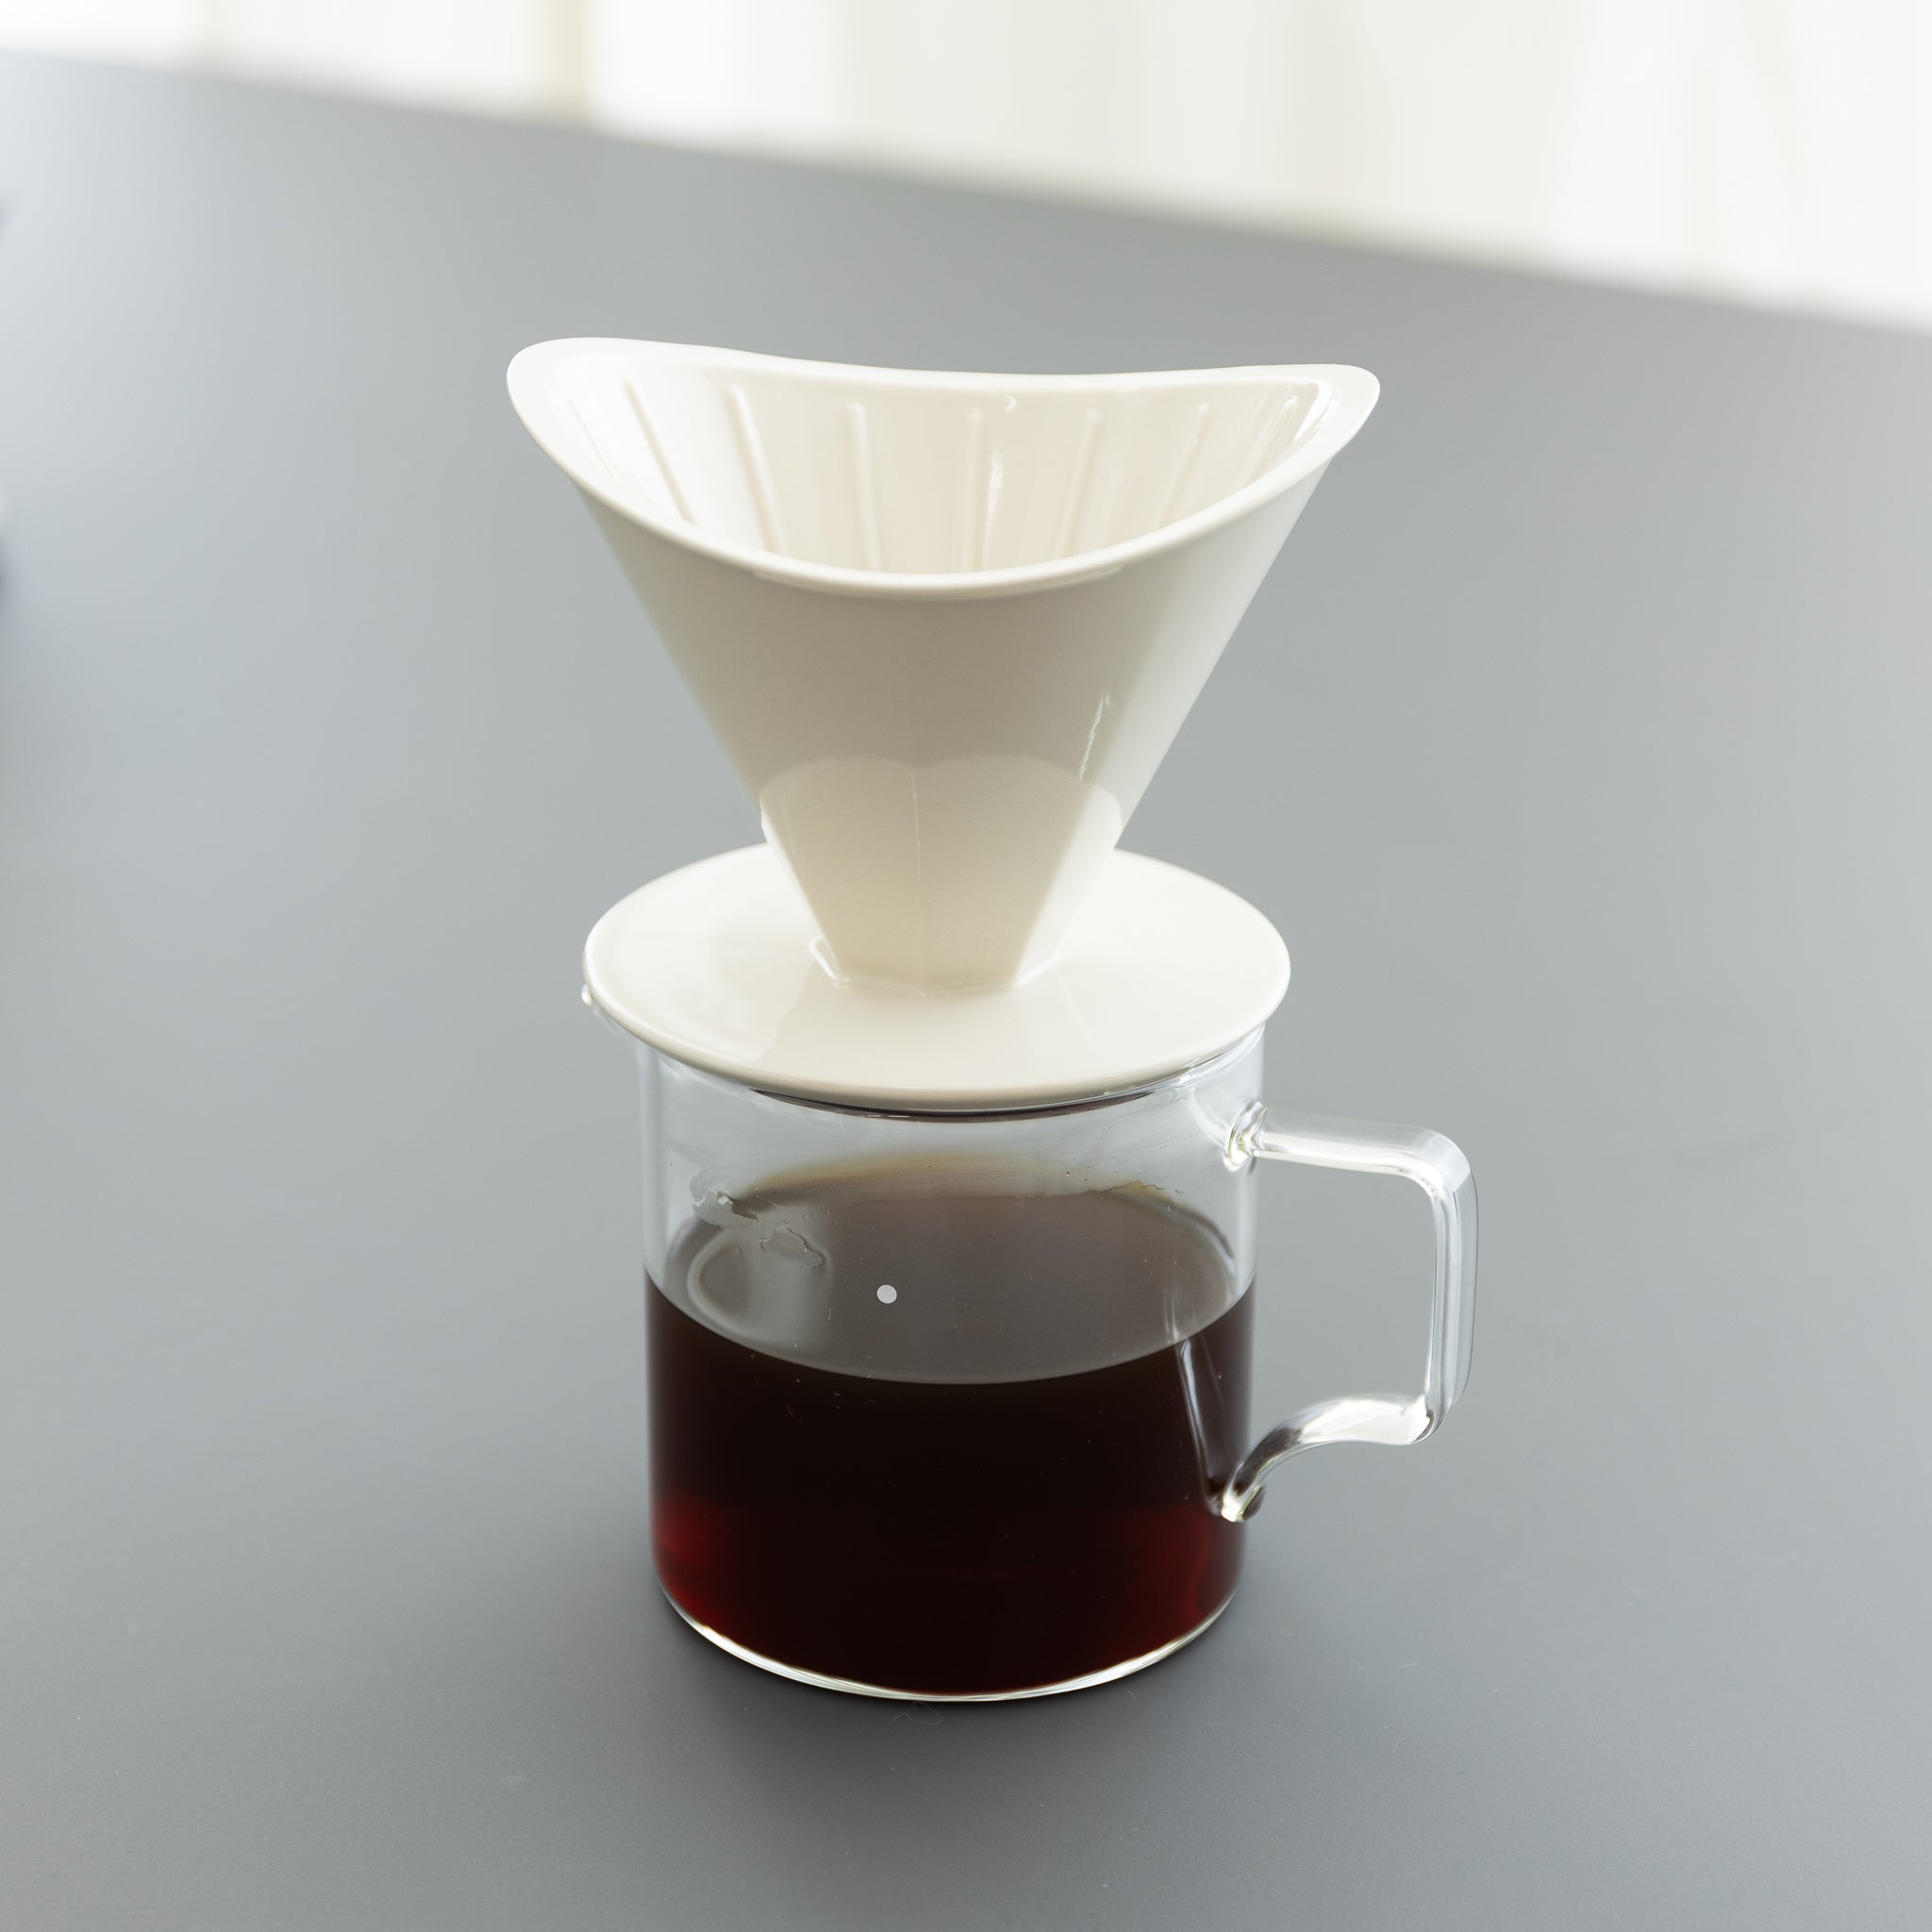 KINTO OCT Coffee Jug - 2 Cups